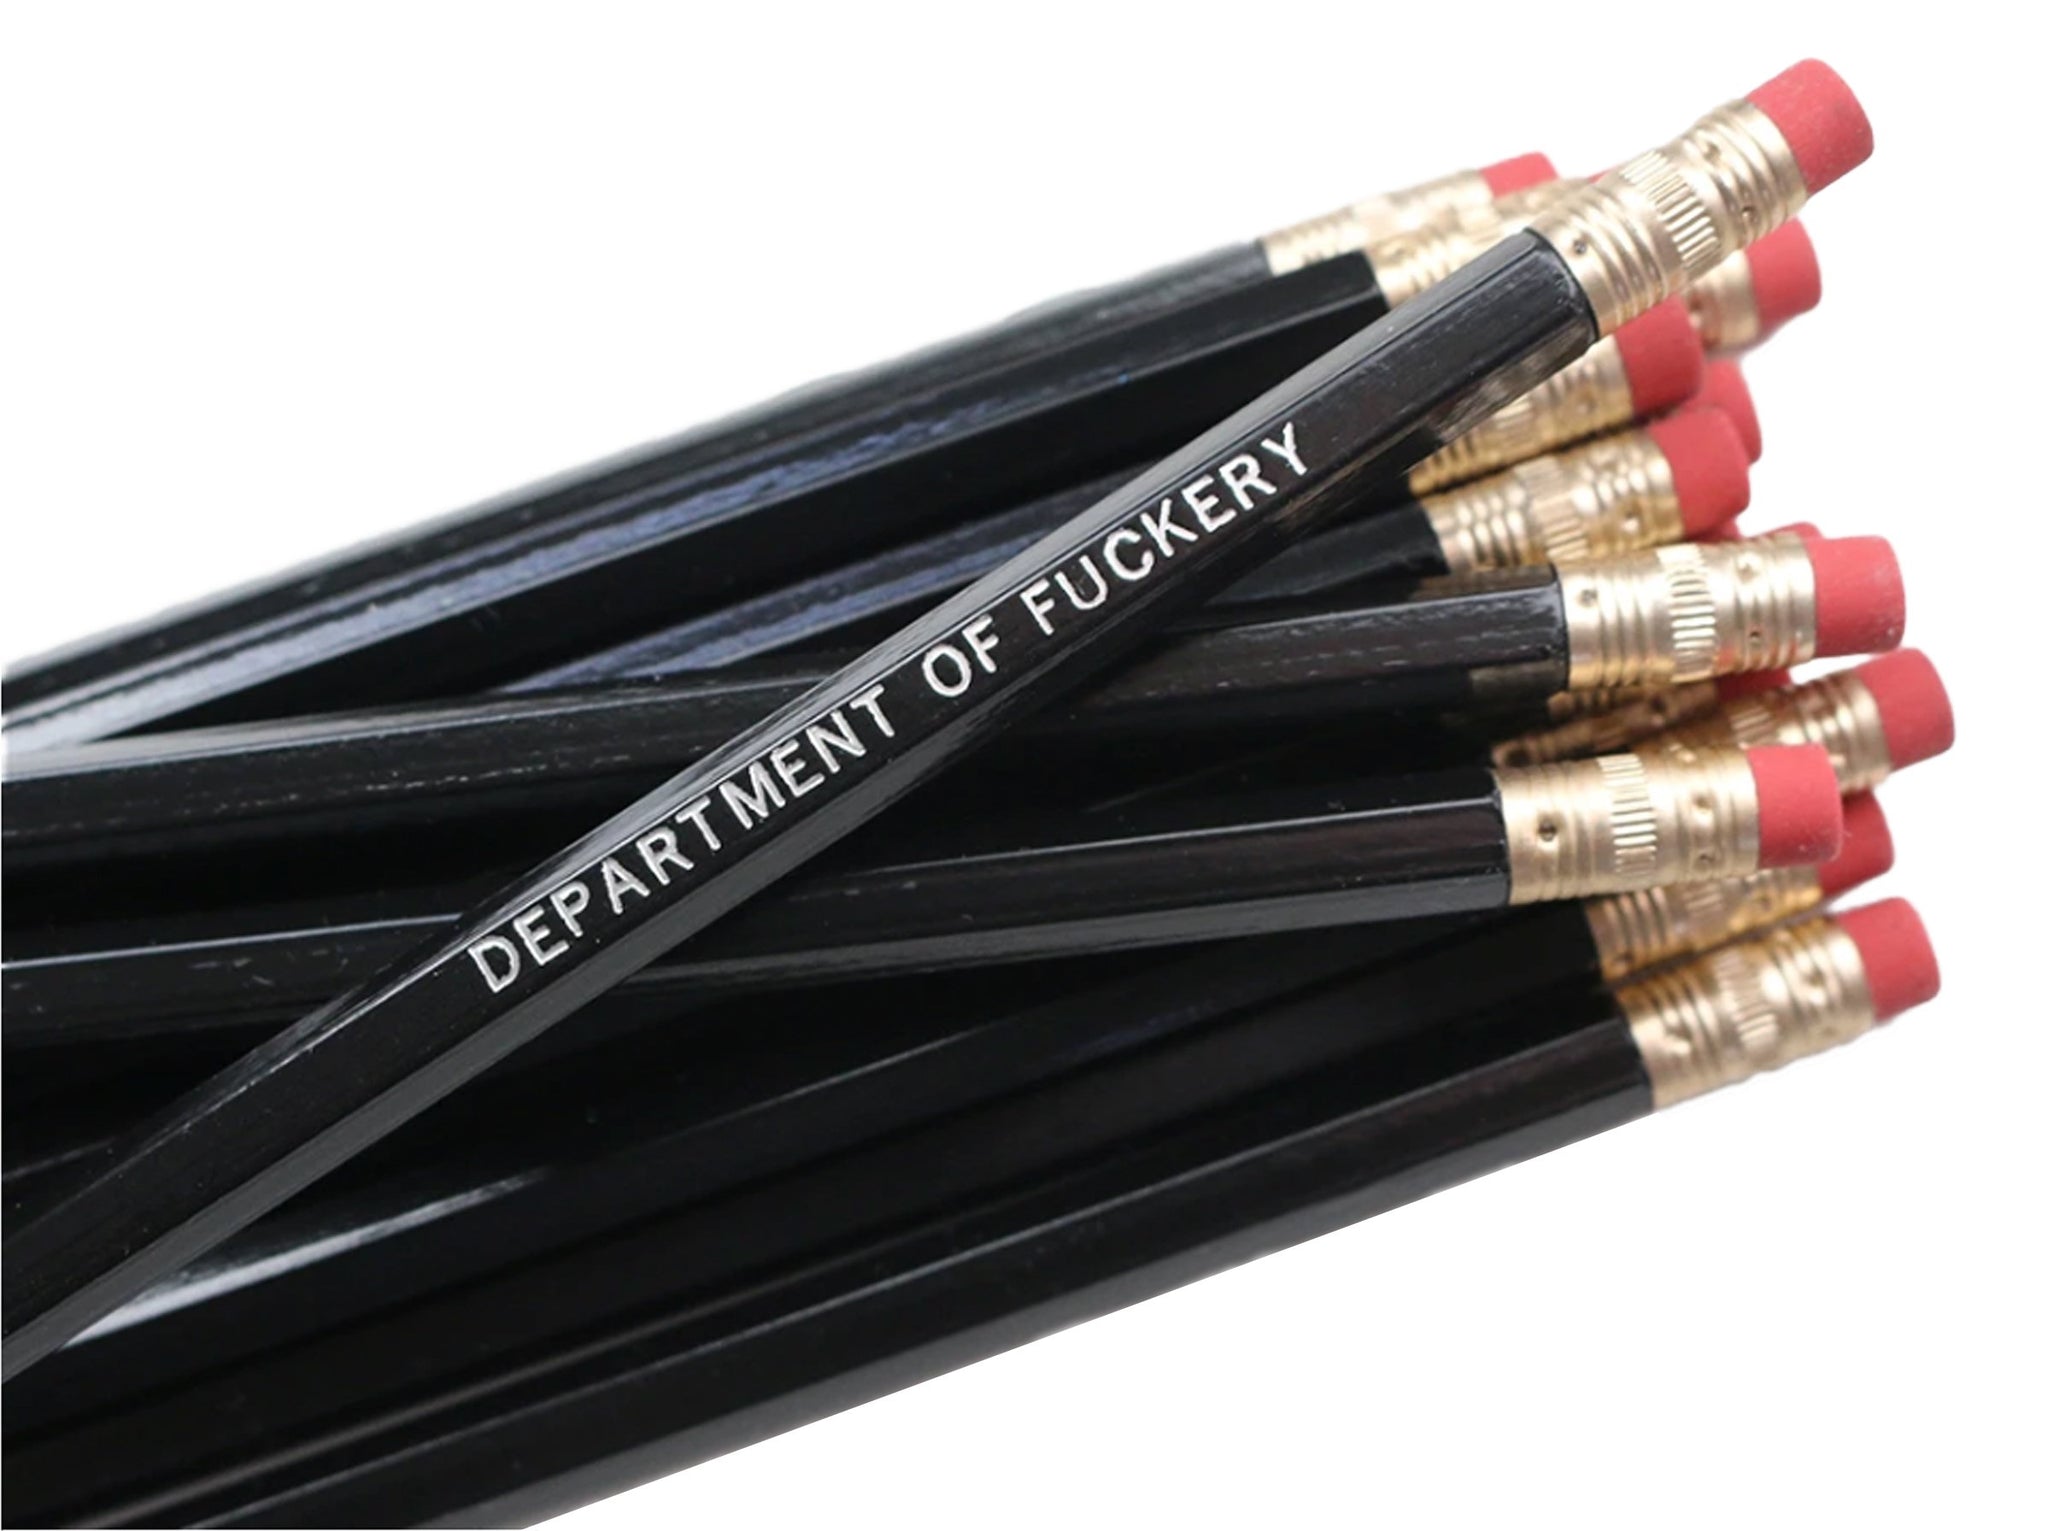 Department of Fuckery Pen Set in Black | Set of 3 Funny Sweary Profanity  Ballpoint Pens by The Bullish Store